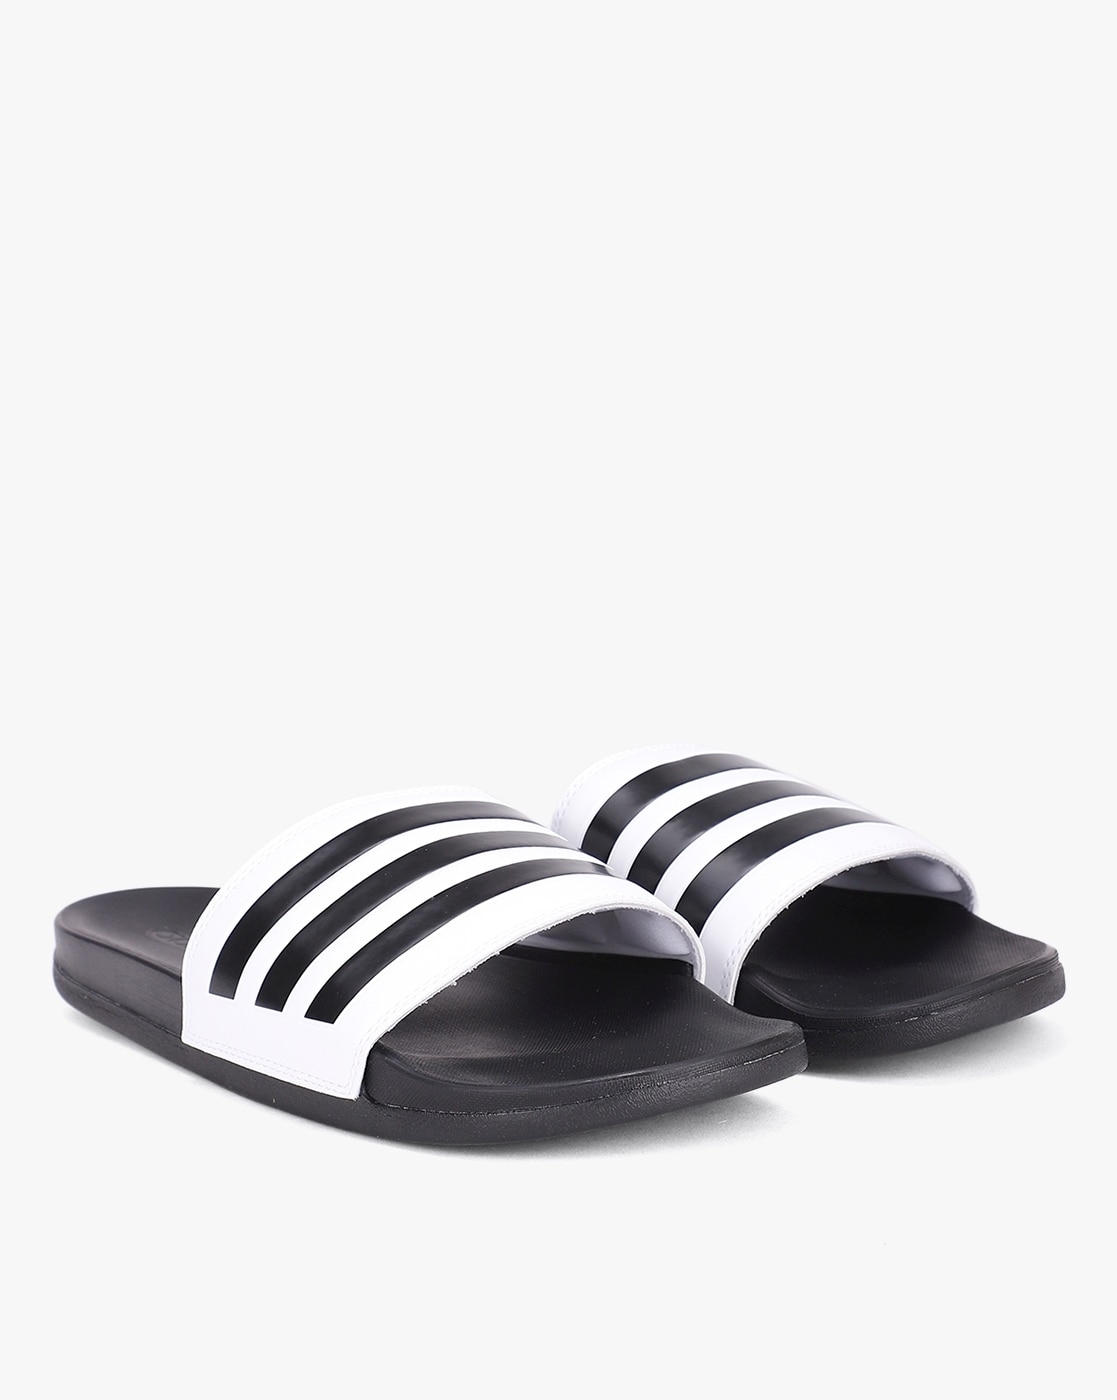 Buy Black  White Flip Flop  Slippers for Men by ADIDAS Online  Ajiocom